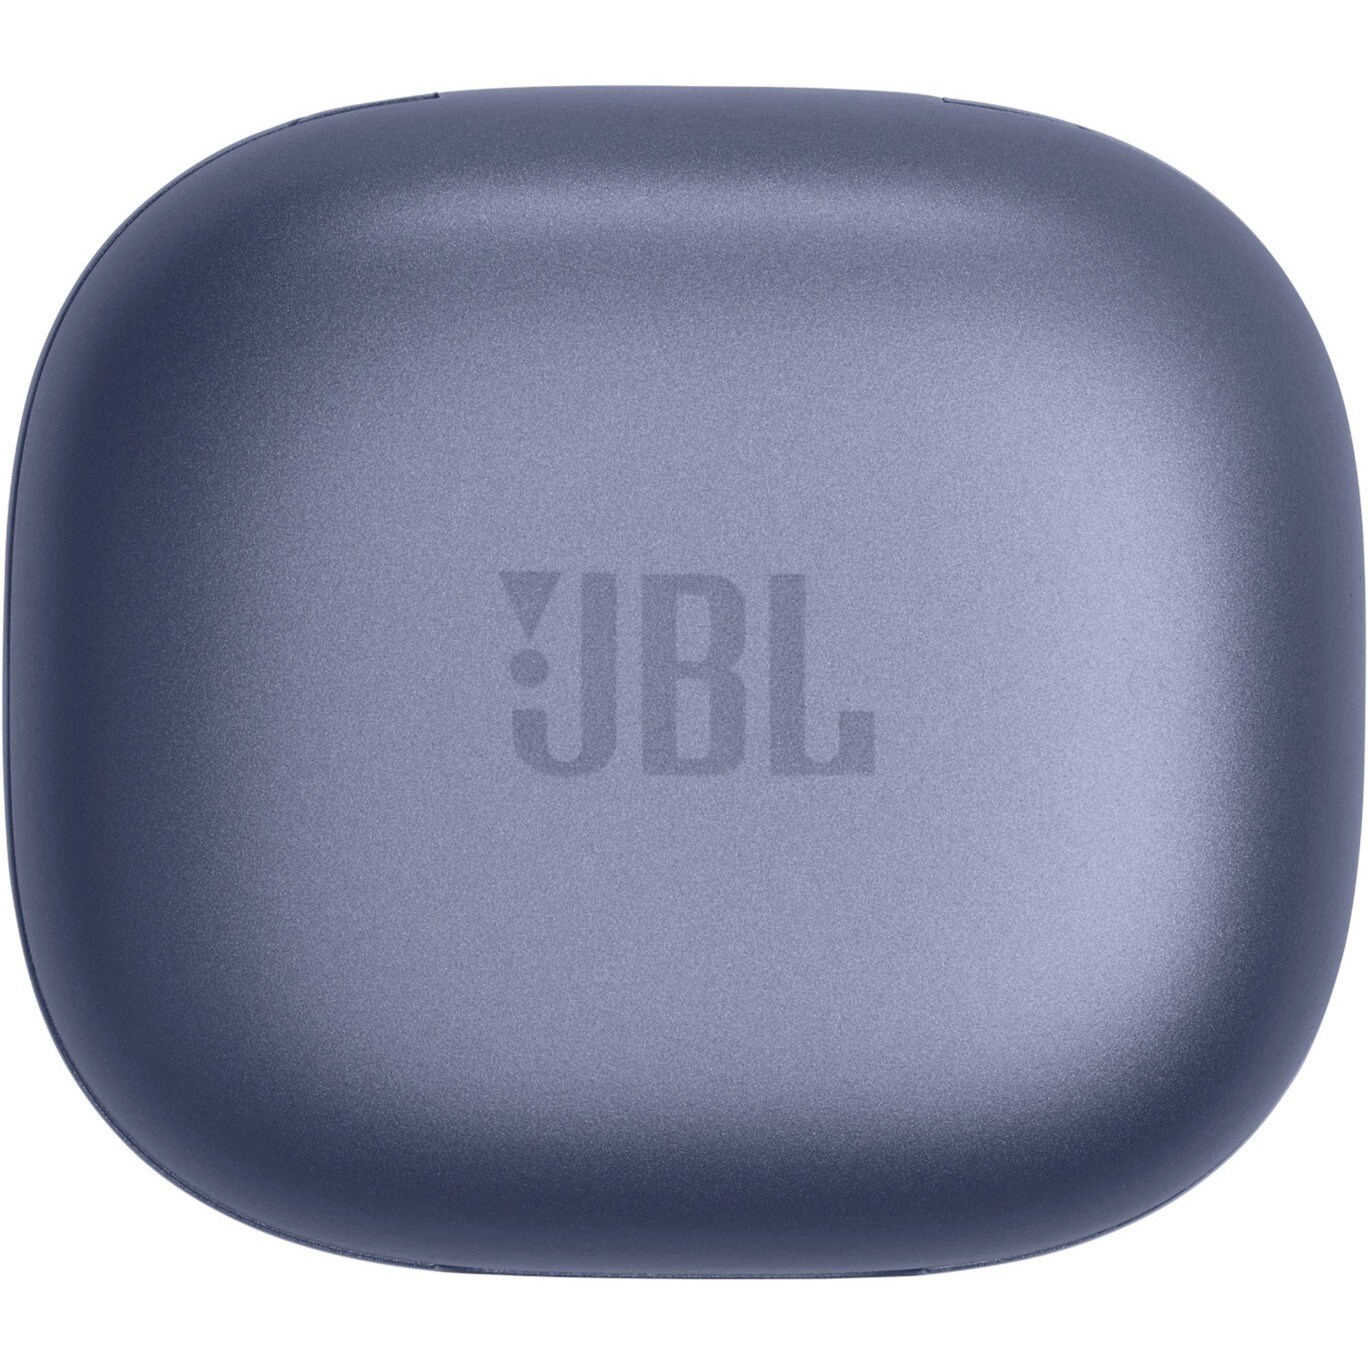 [Wir haben eine große Menge] JBL LIVE Flex True Bluetooth In-Ear Wireless ++ Kopfhörer Cyberport blau